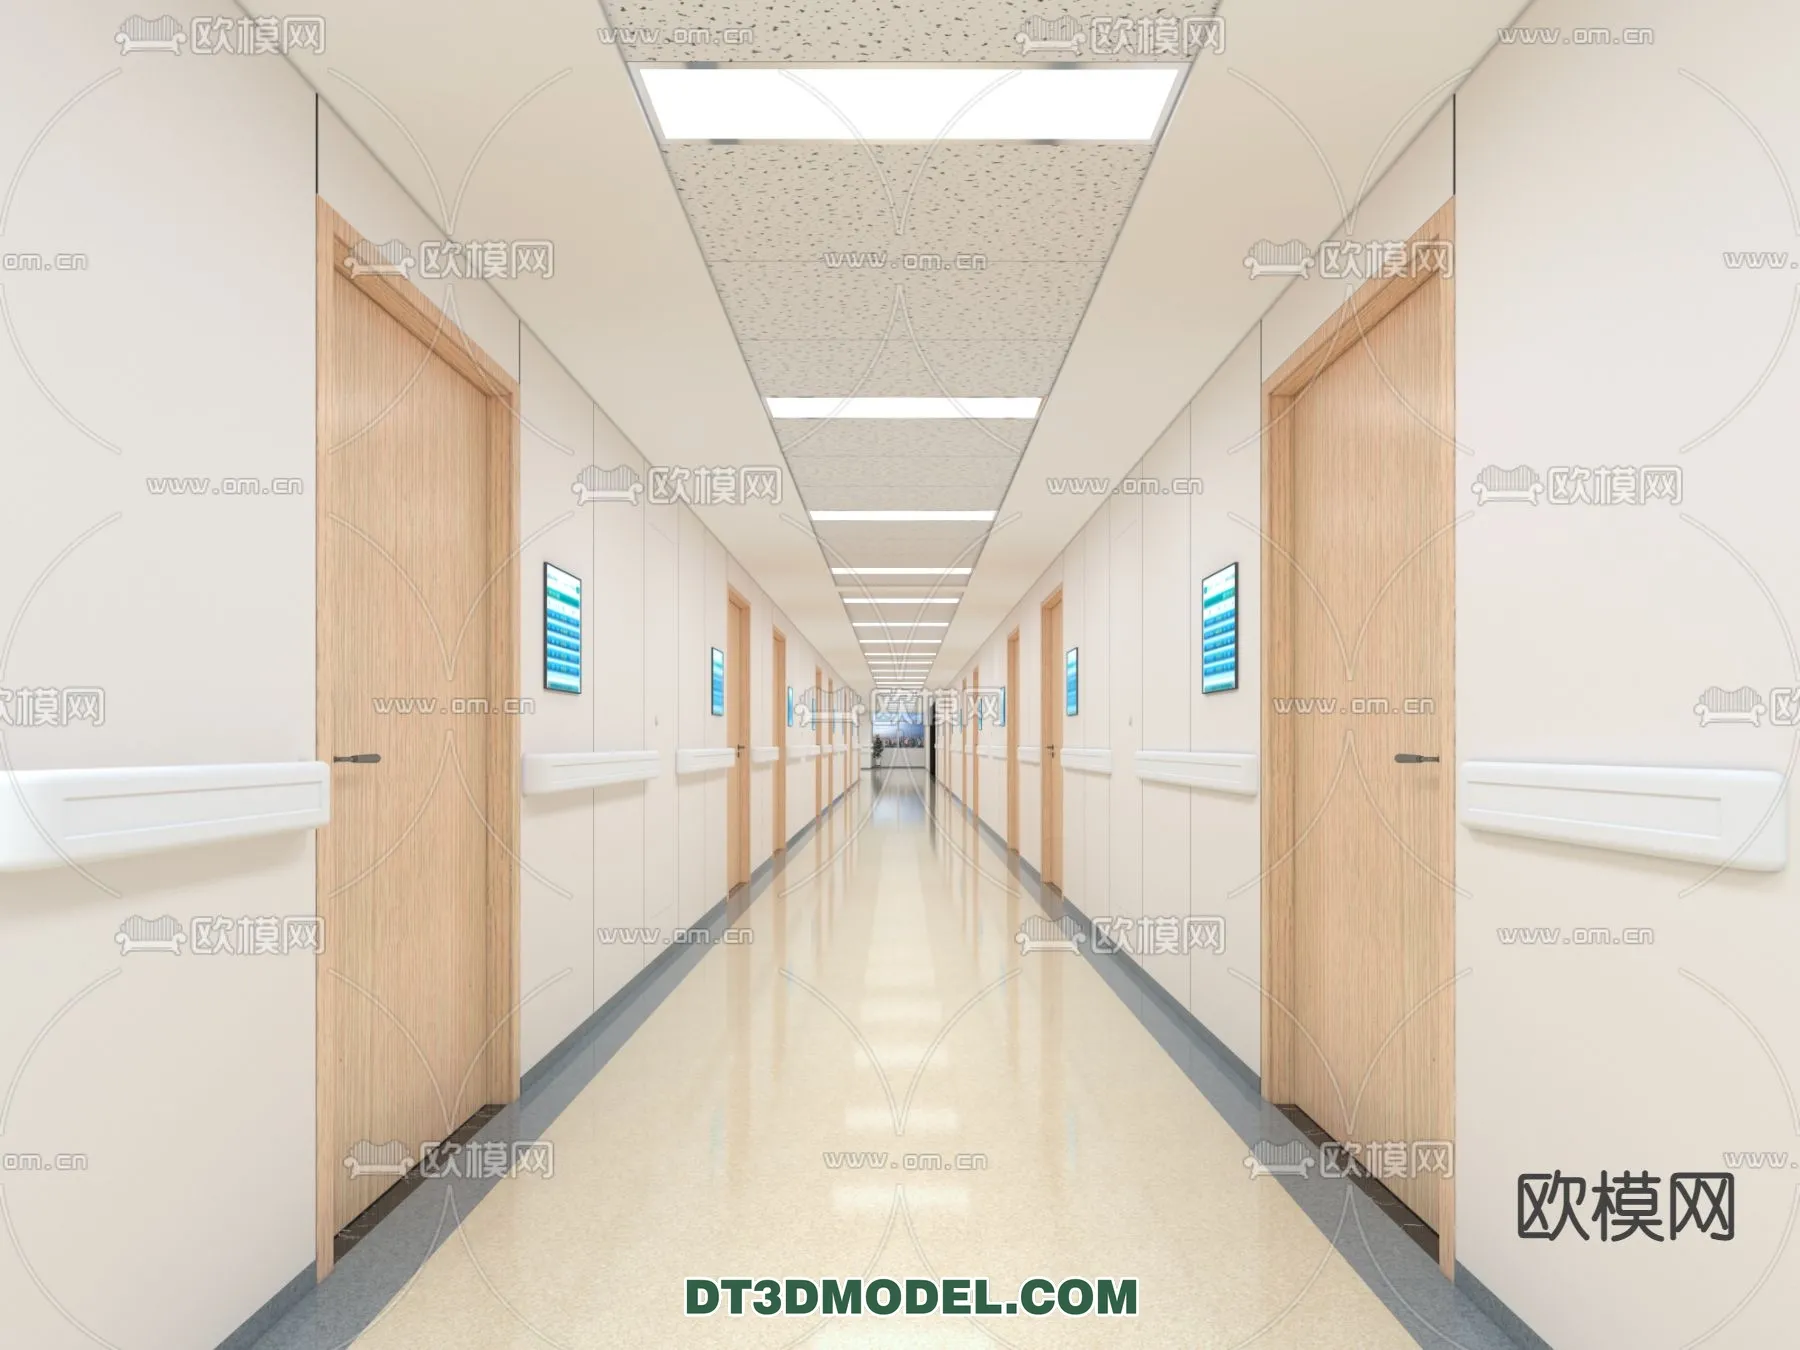 HOSPITAL 3D SCENES – MODERN – 0053